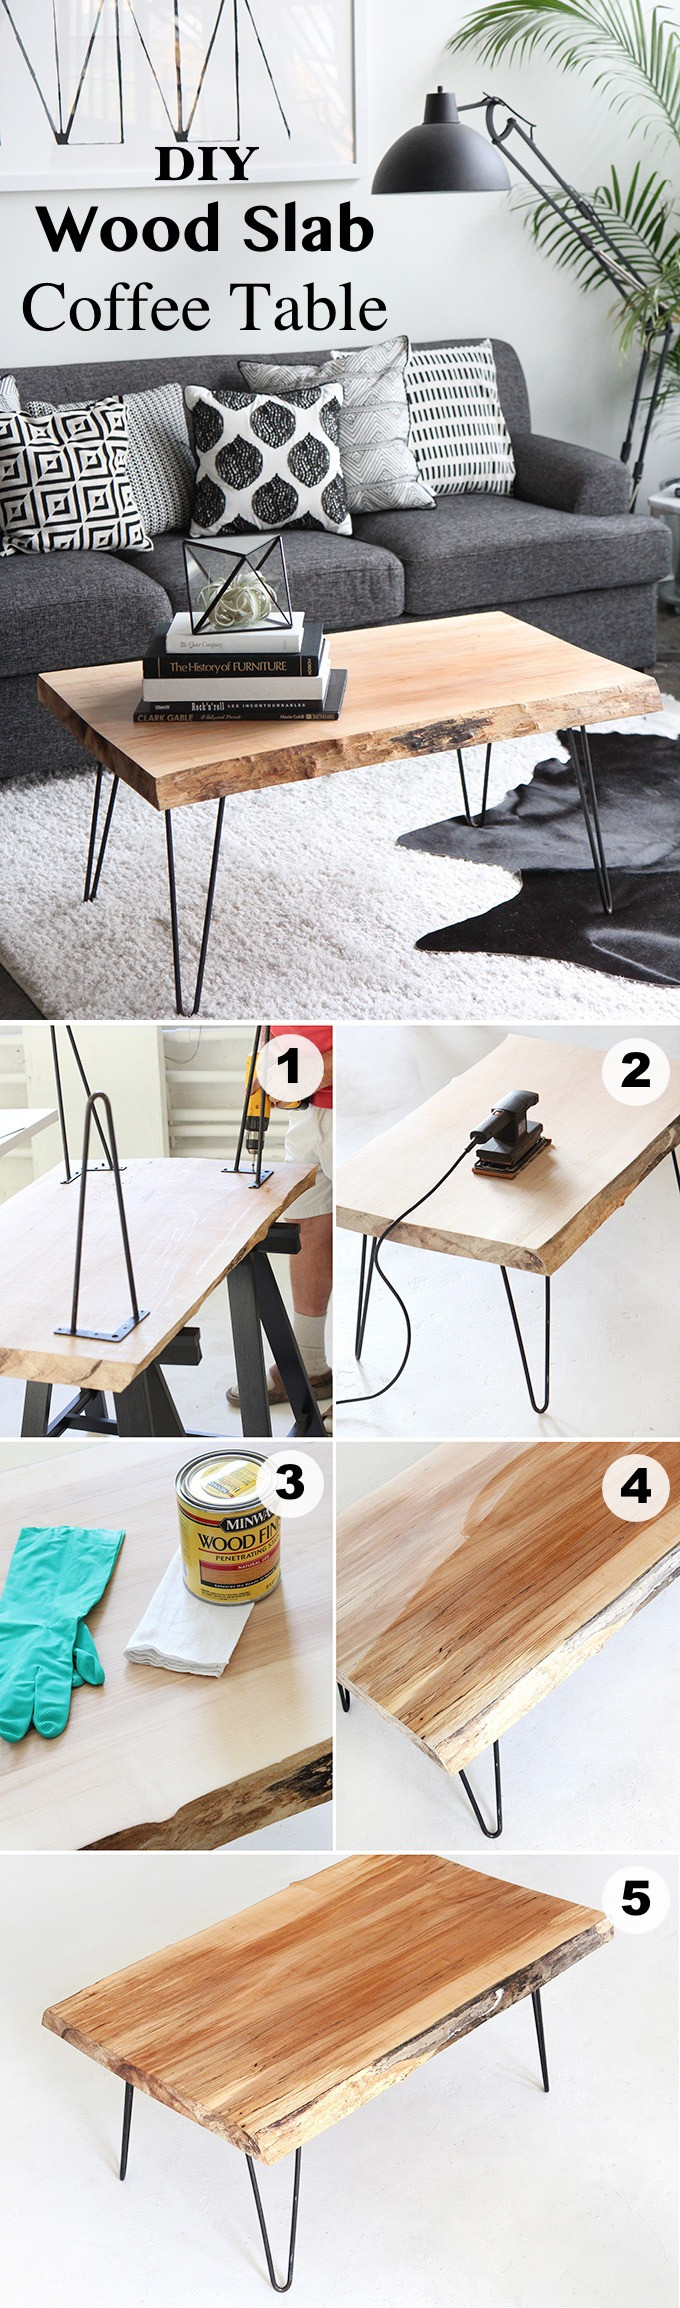 Wood Slab Coffee Table DIY
 15 Creative DIY Coffee Table Ideas You Can Build Yourself